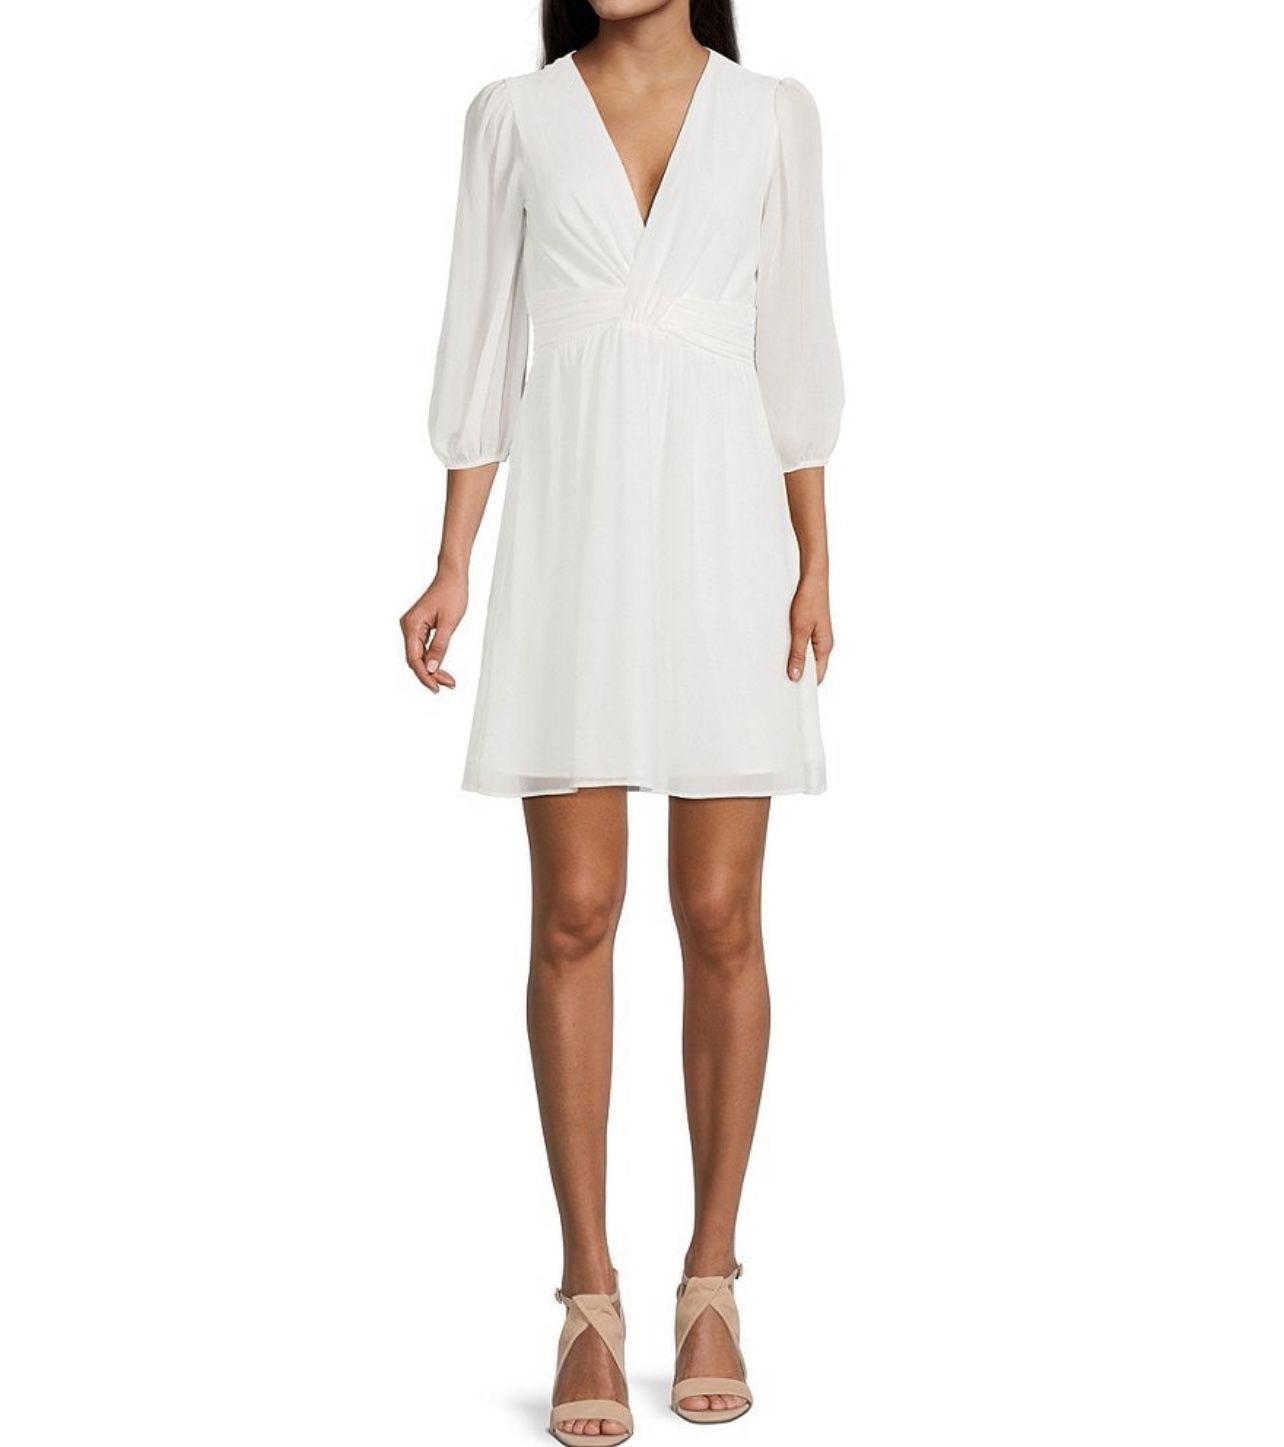 Vince Camuto White 3/4 Length Sleeve Dress